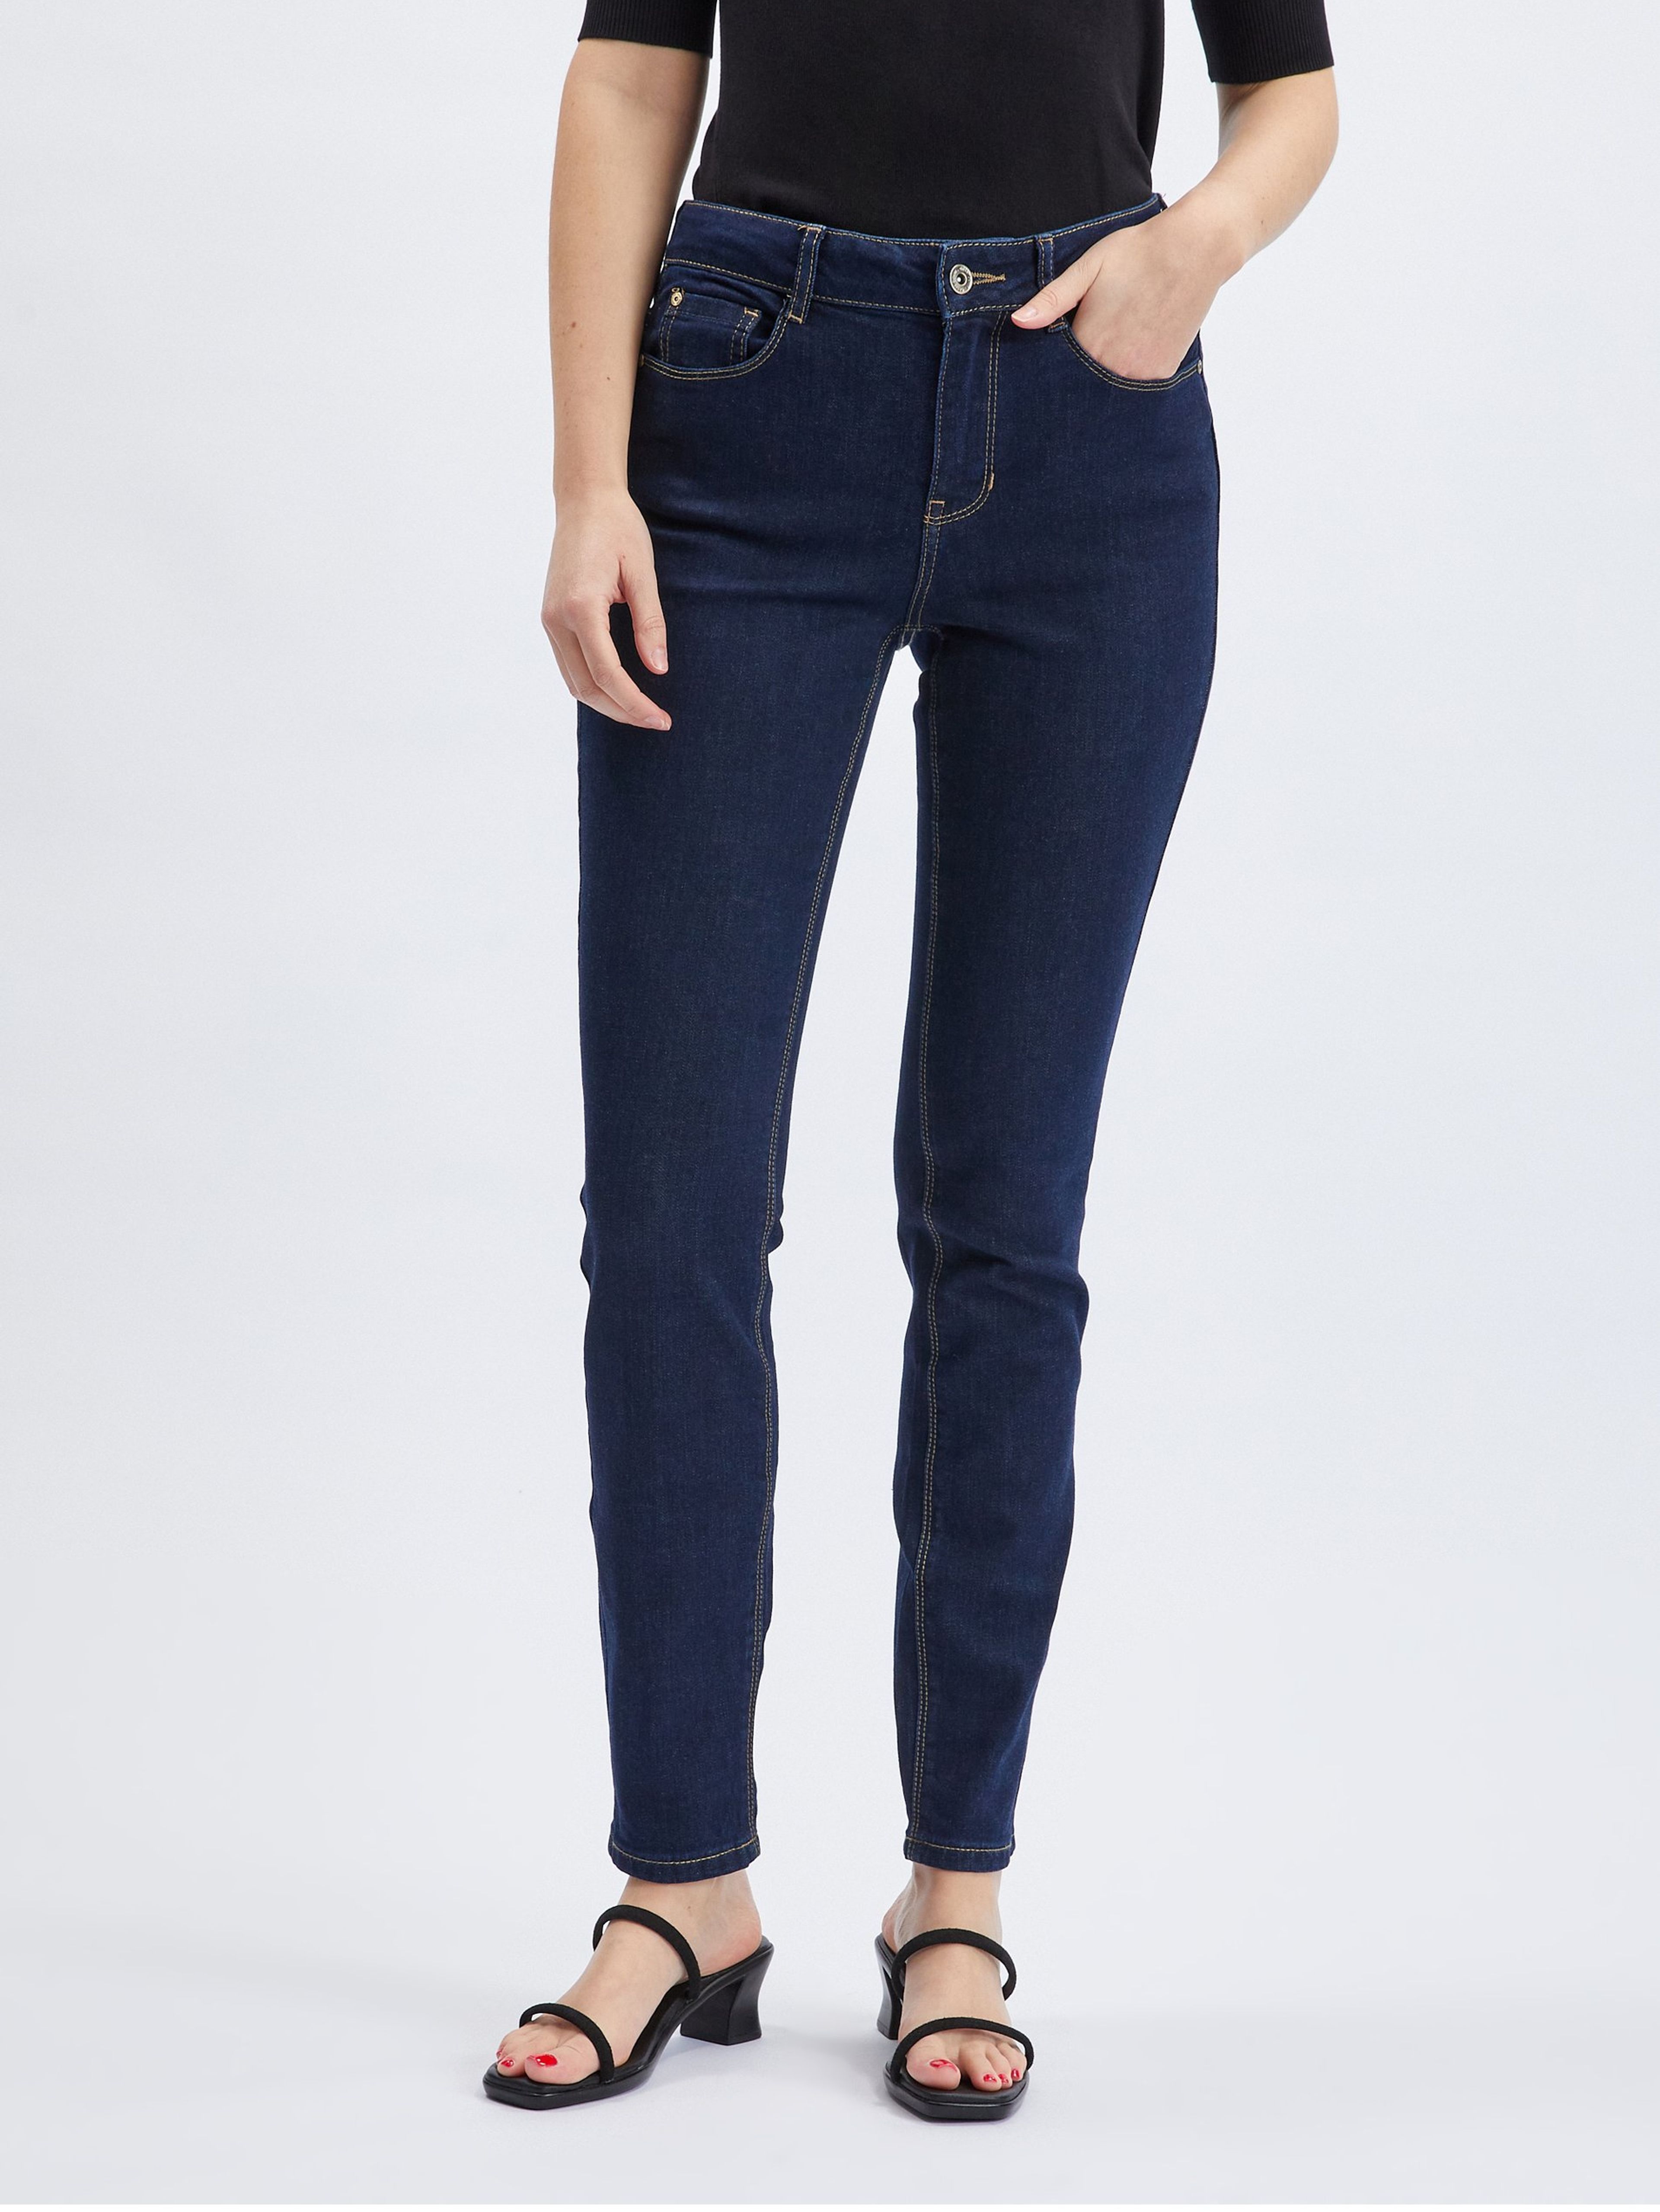 Ciemnoniebieskie jeansy damskie slim fit ORSAY